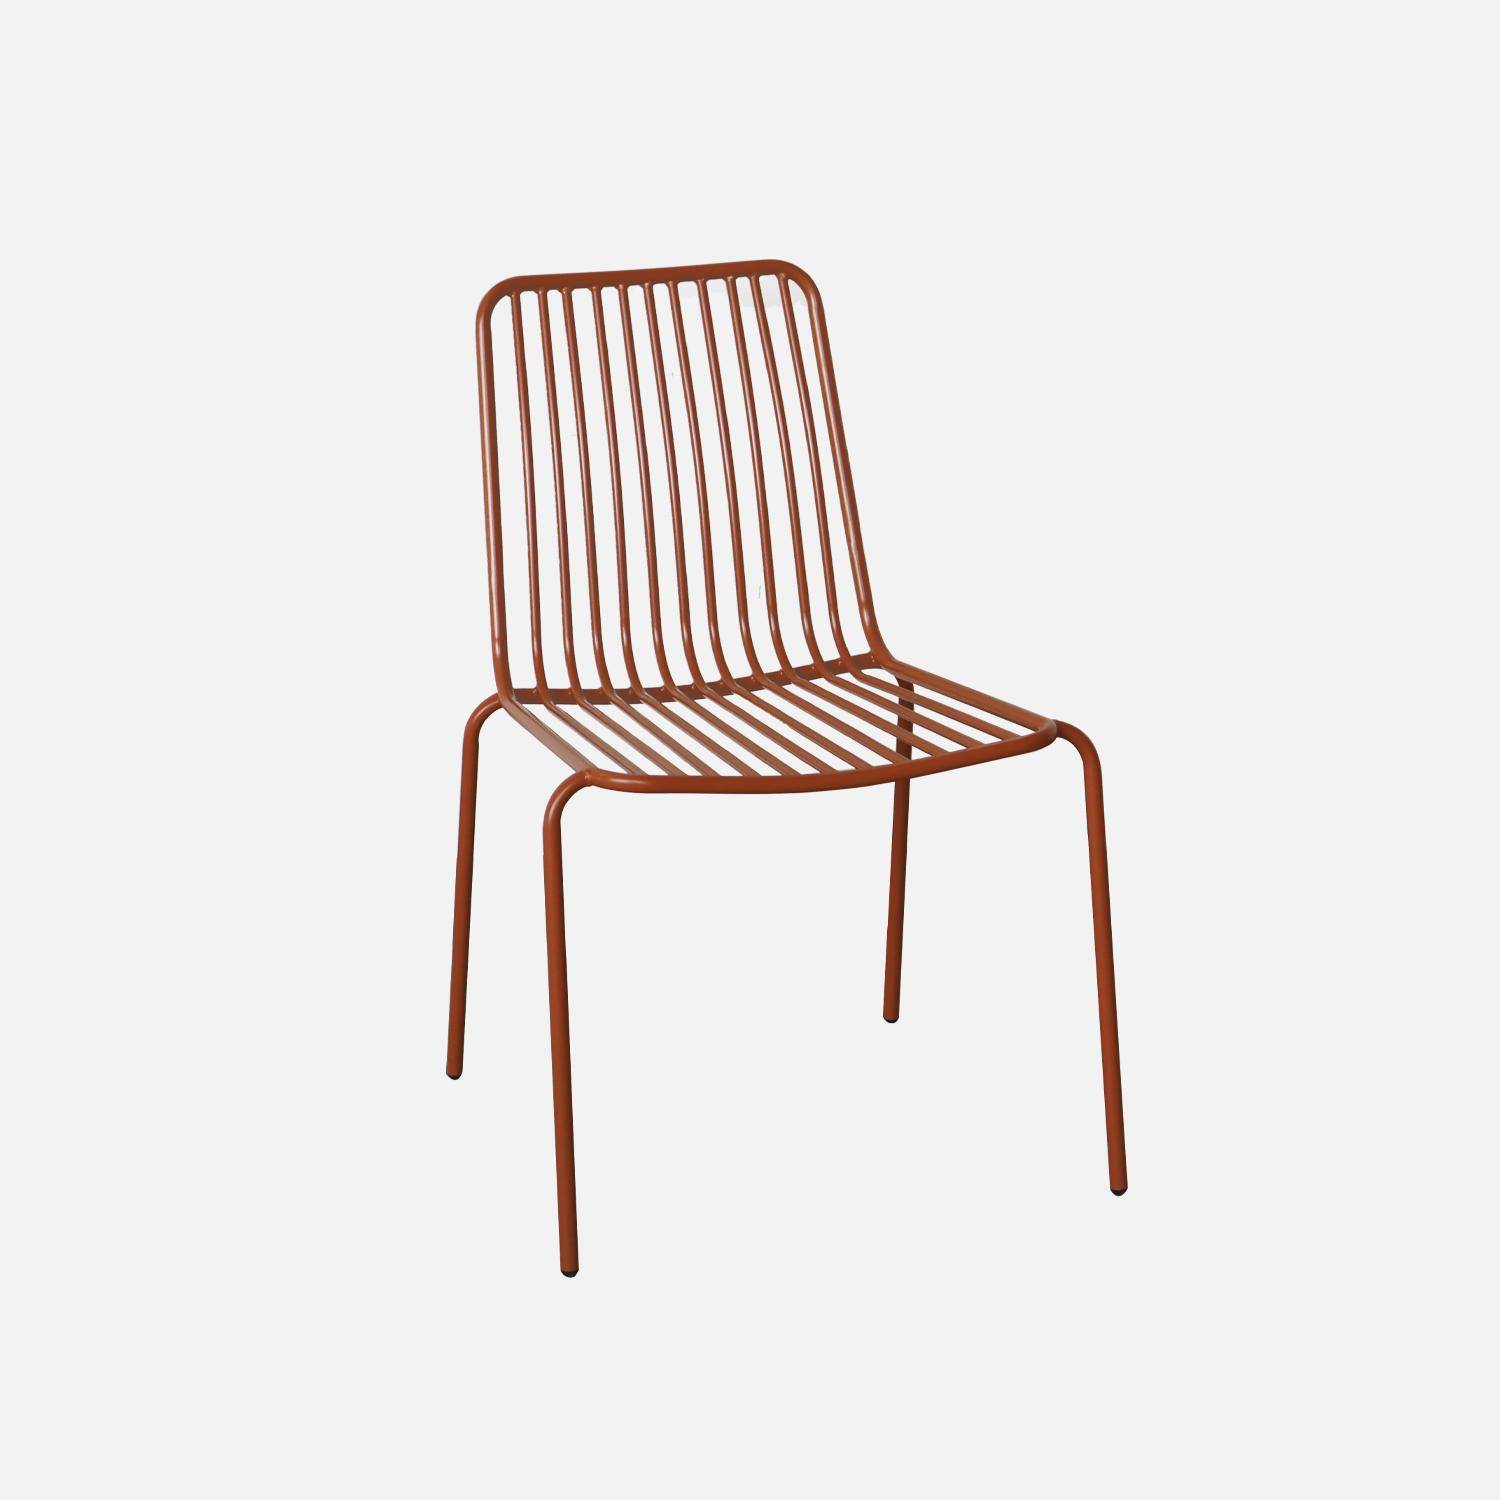 Juego de 2 sillas de jardín de acero terracota, apilables, diseño lineal Photo2